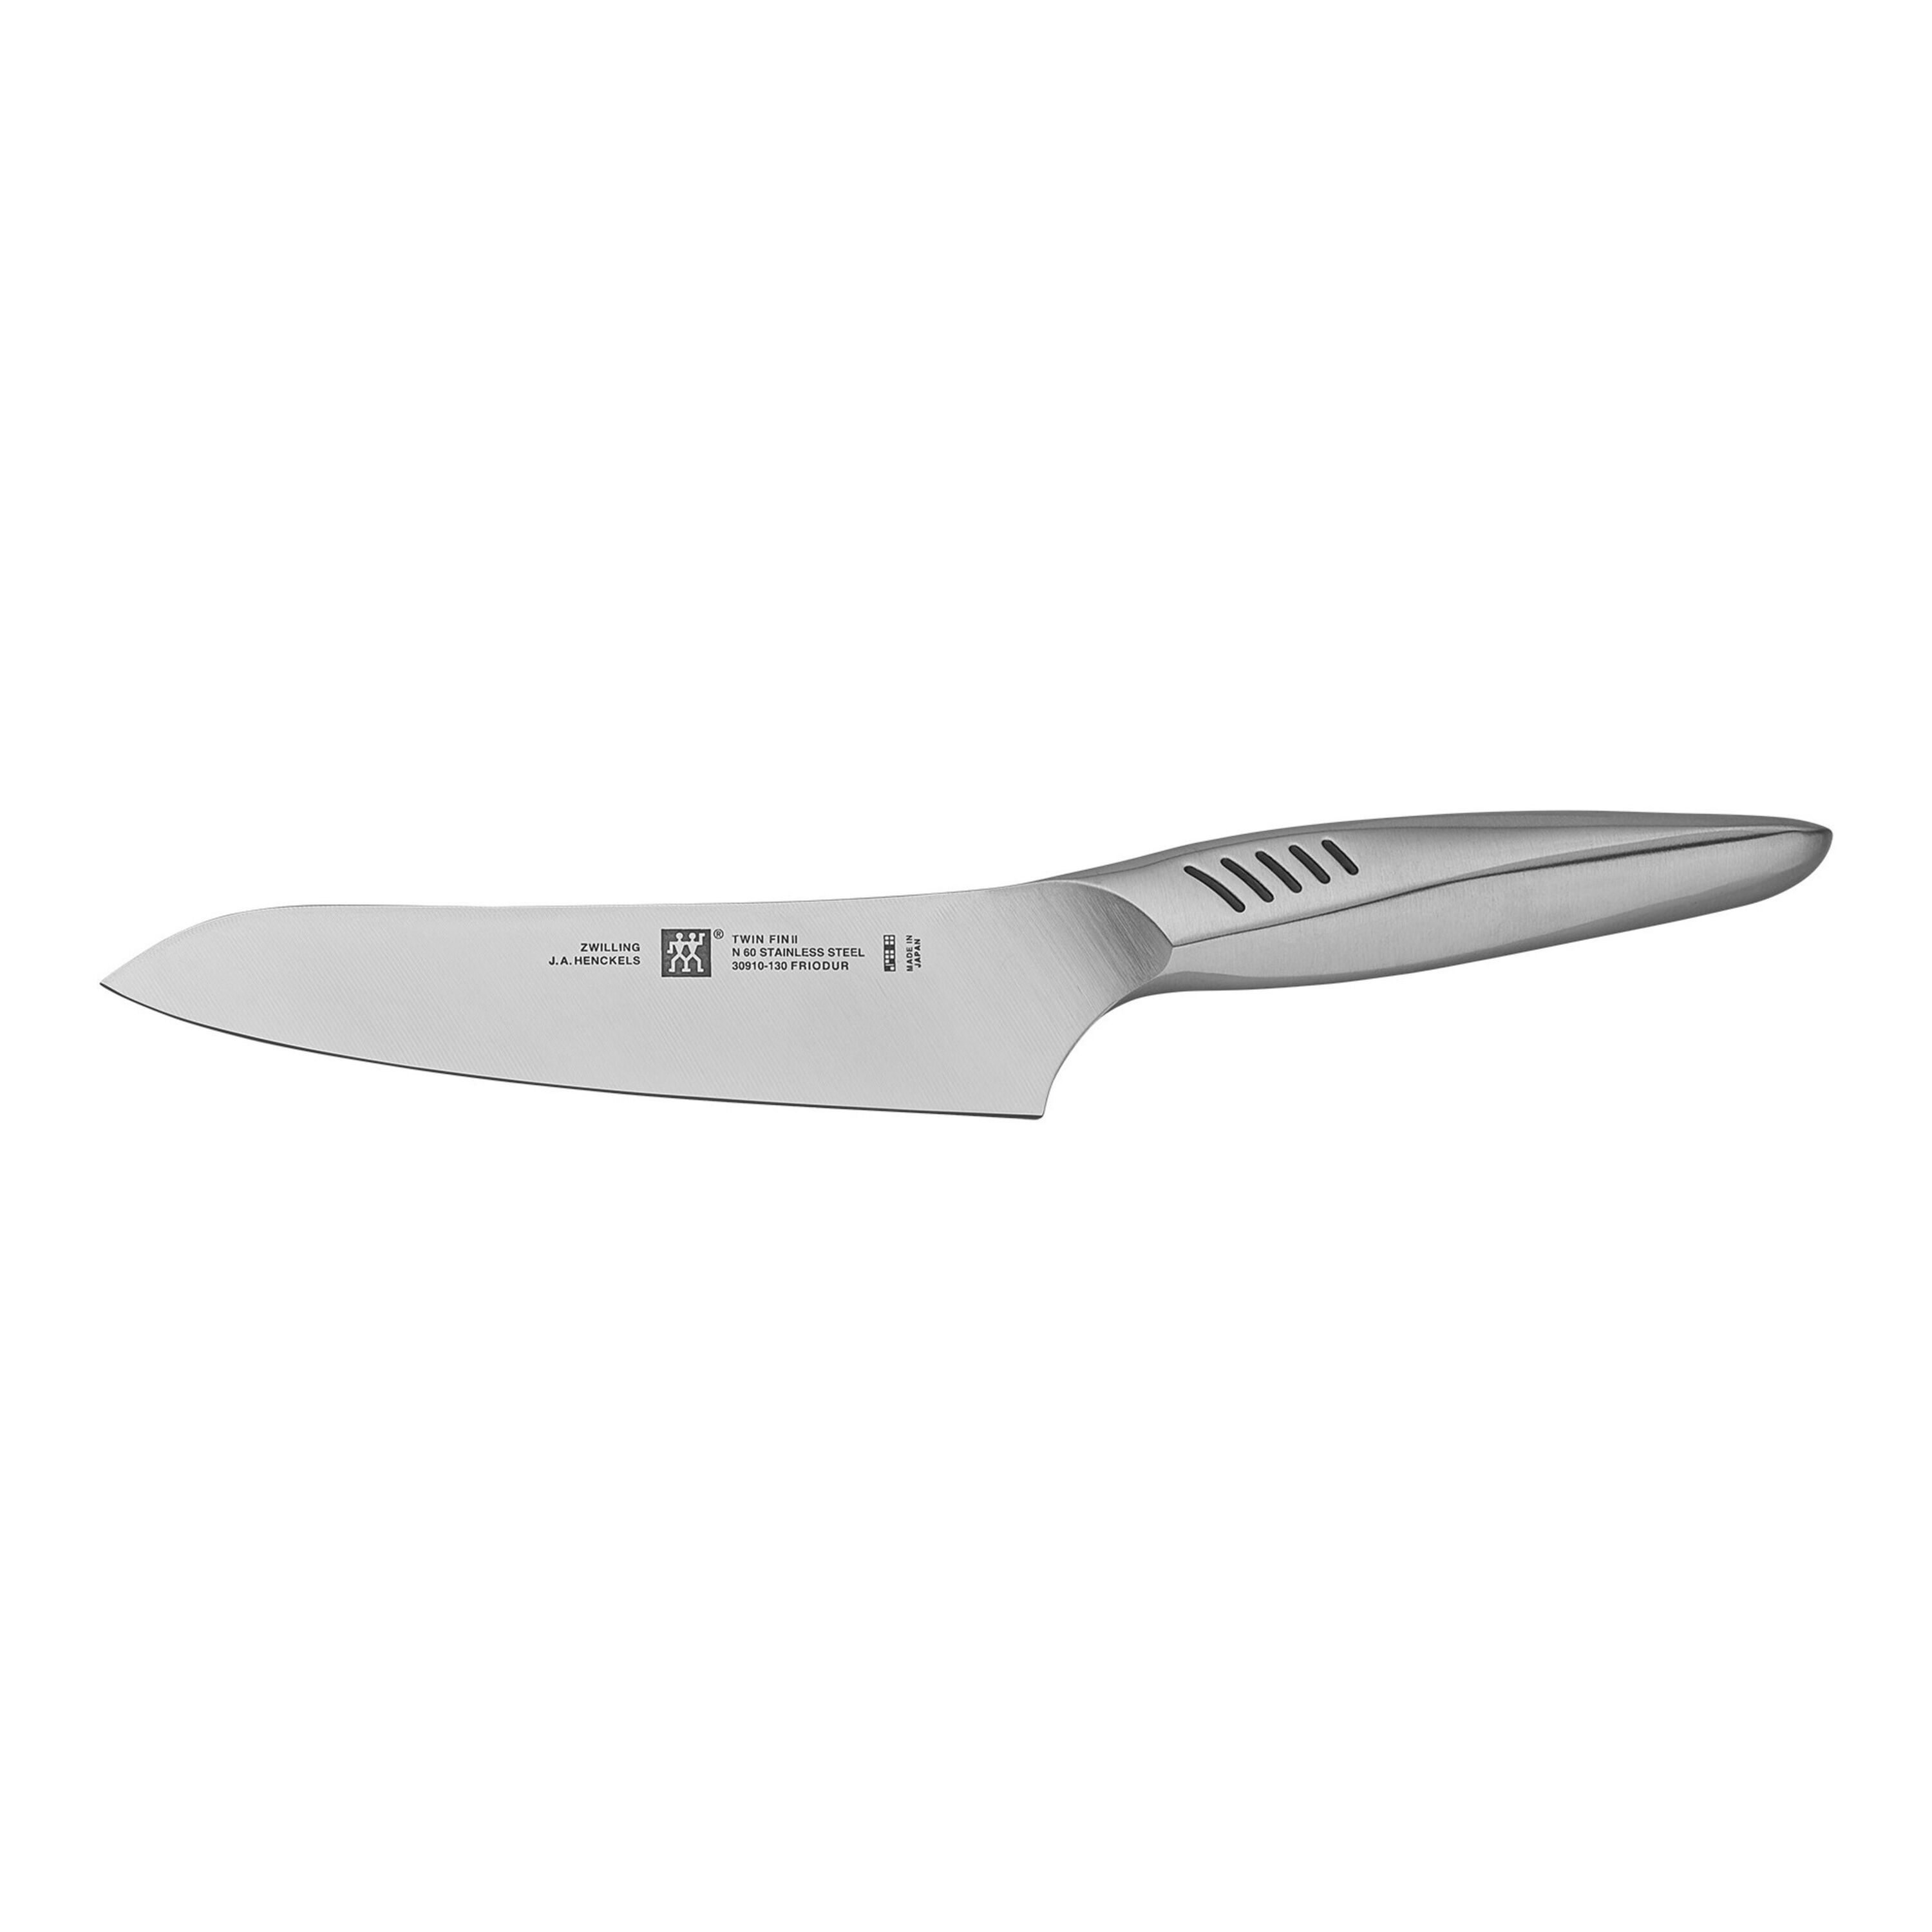 Gyuto Japanese kitchen knife Zwilling J.A.Henckels Takumi Damascus  30551-201-0 20cm for sale